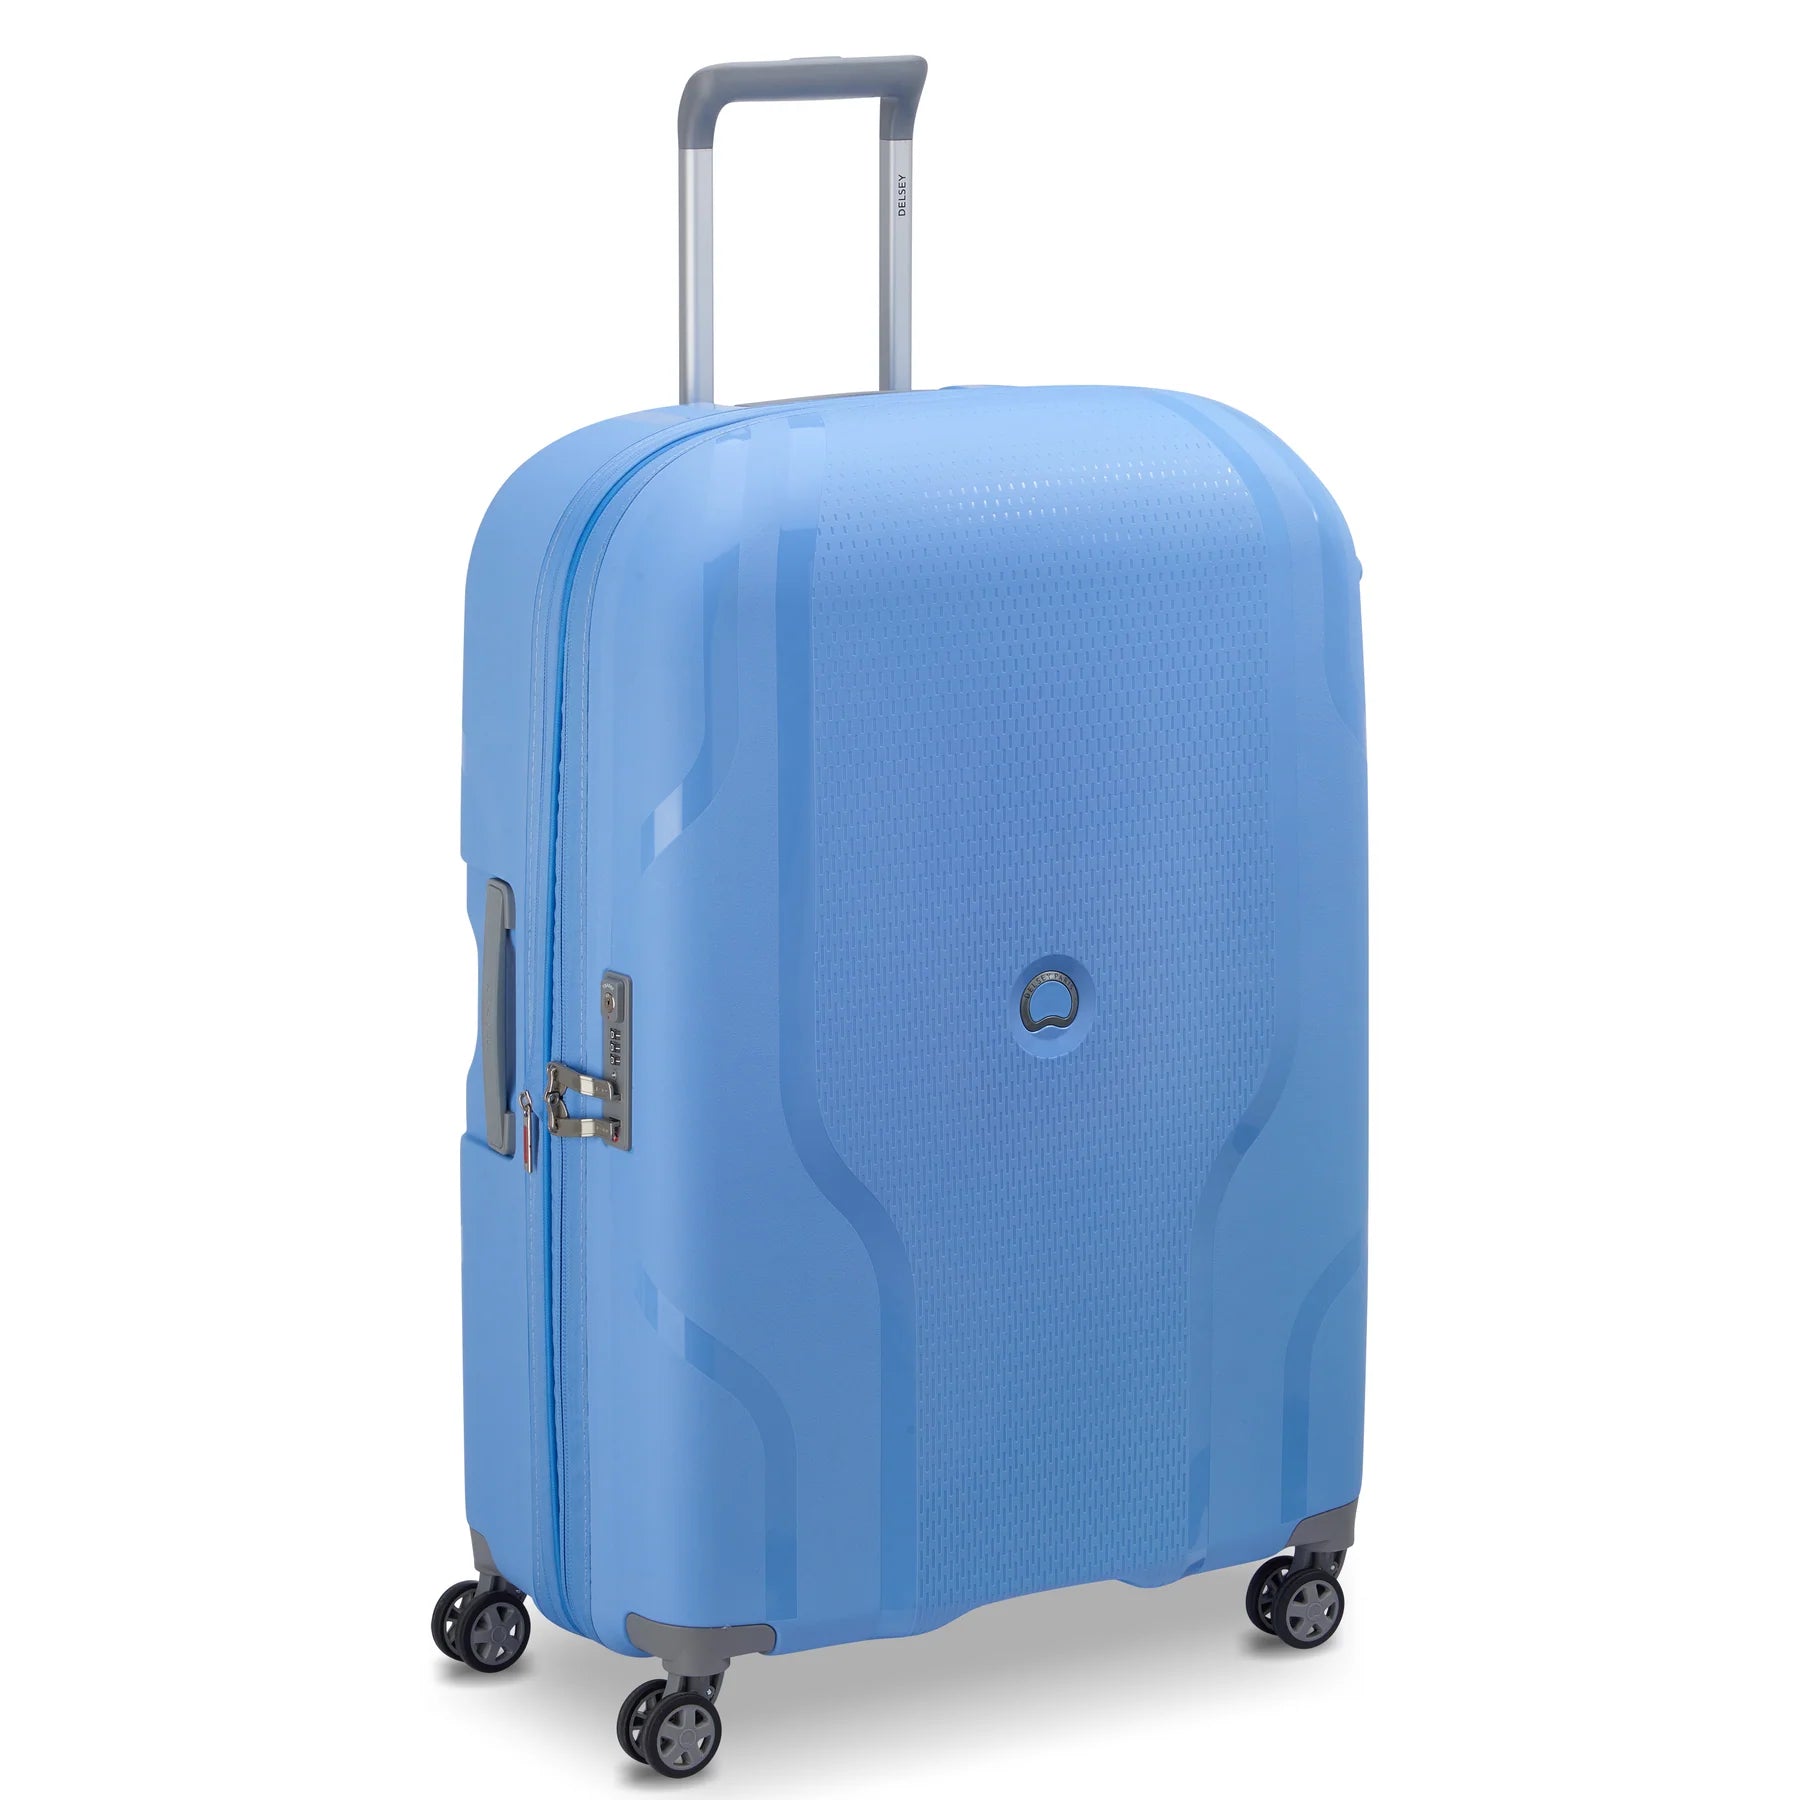 Delsey Clavel Hard Stor Utvidbar Koffert Med 4 Hjul 76 cm Lavender Blue